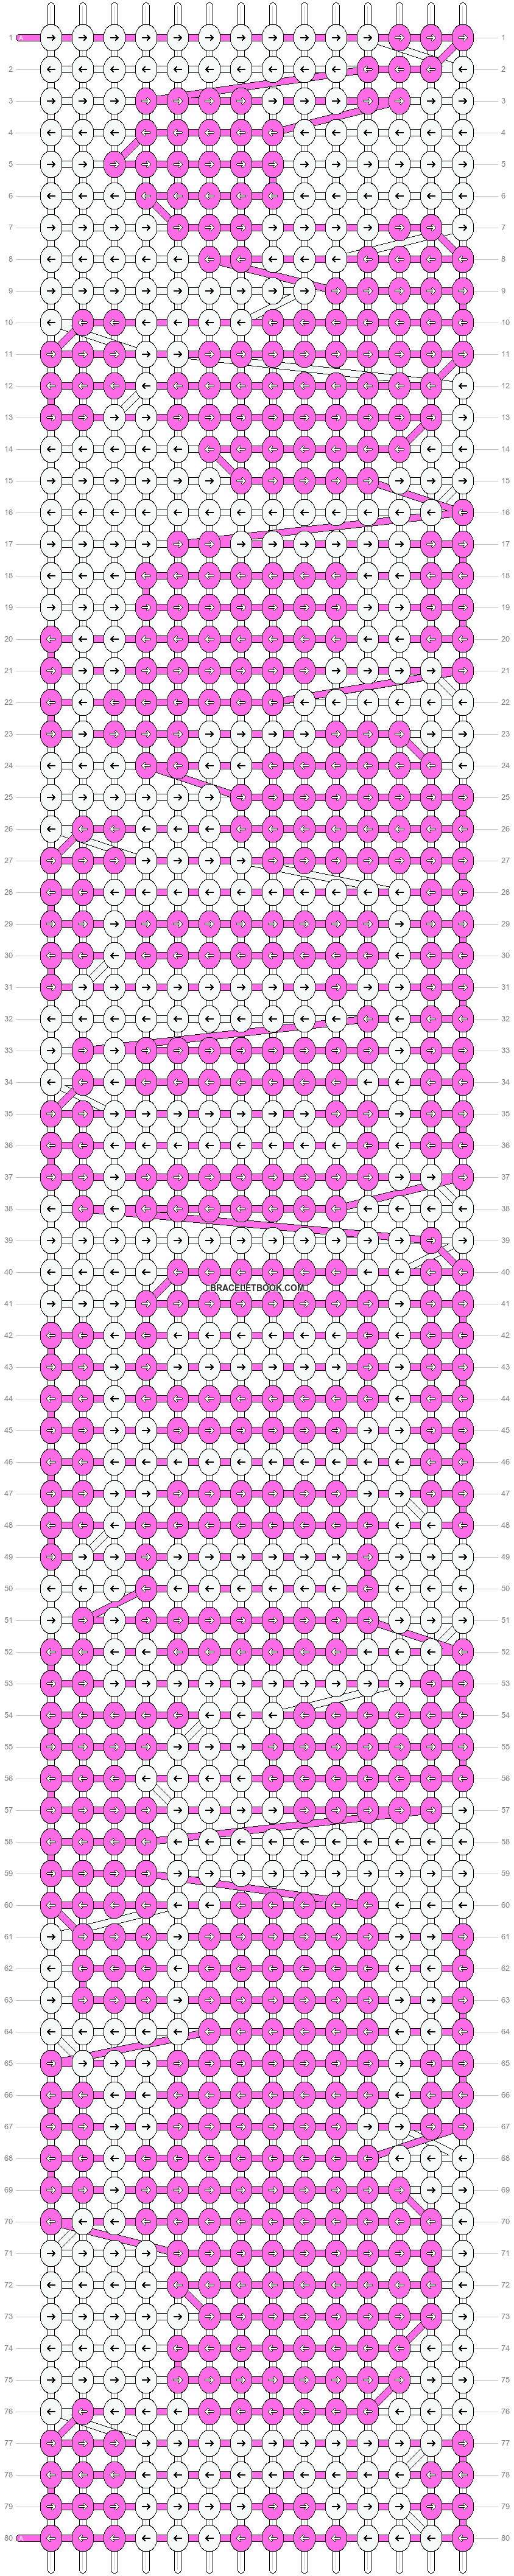 Alpha pattern #12829 variation #24477 pattern